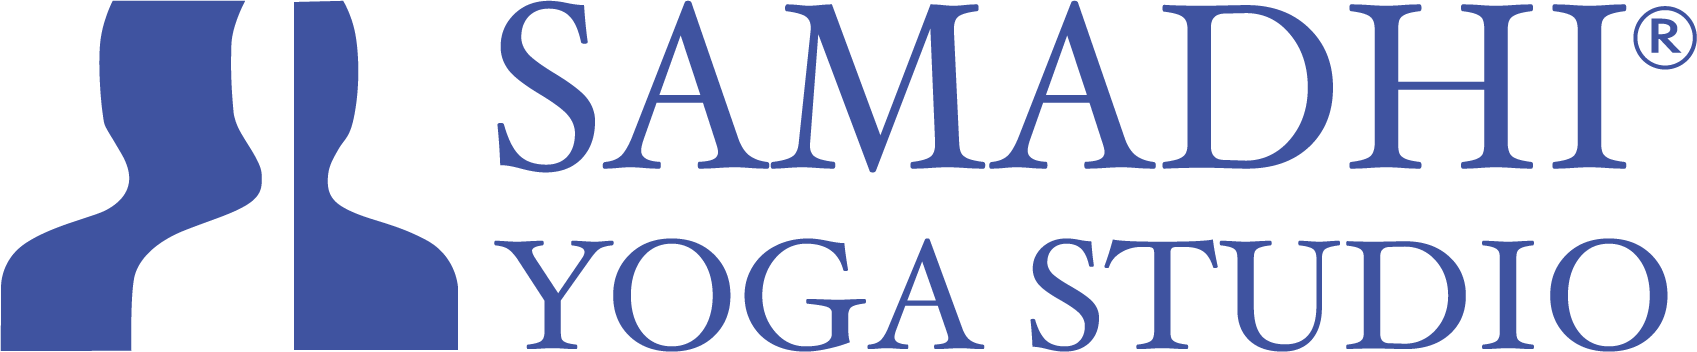 Samadhi Yoga Studio APS